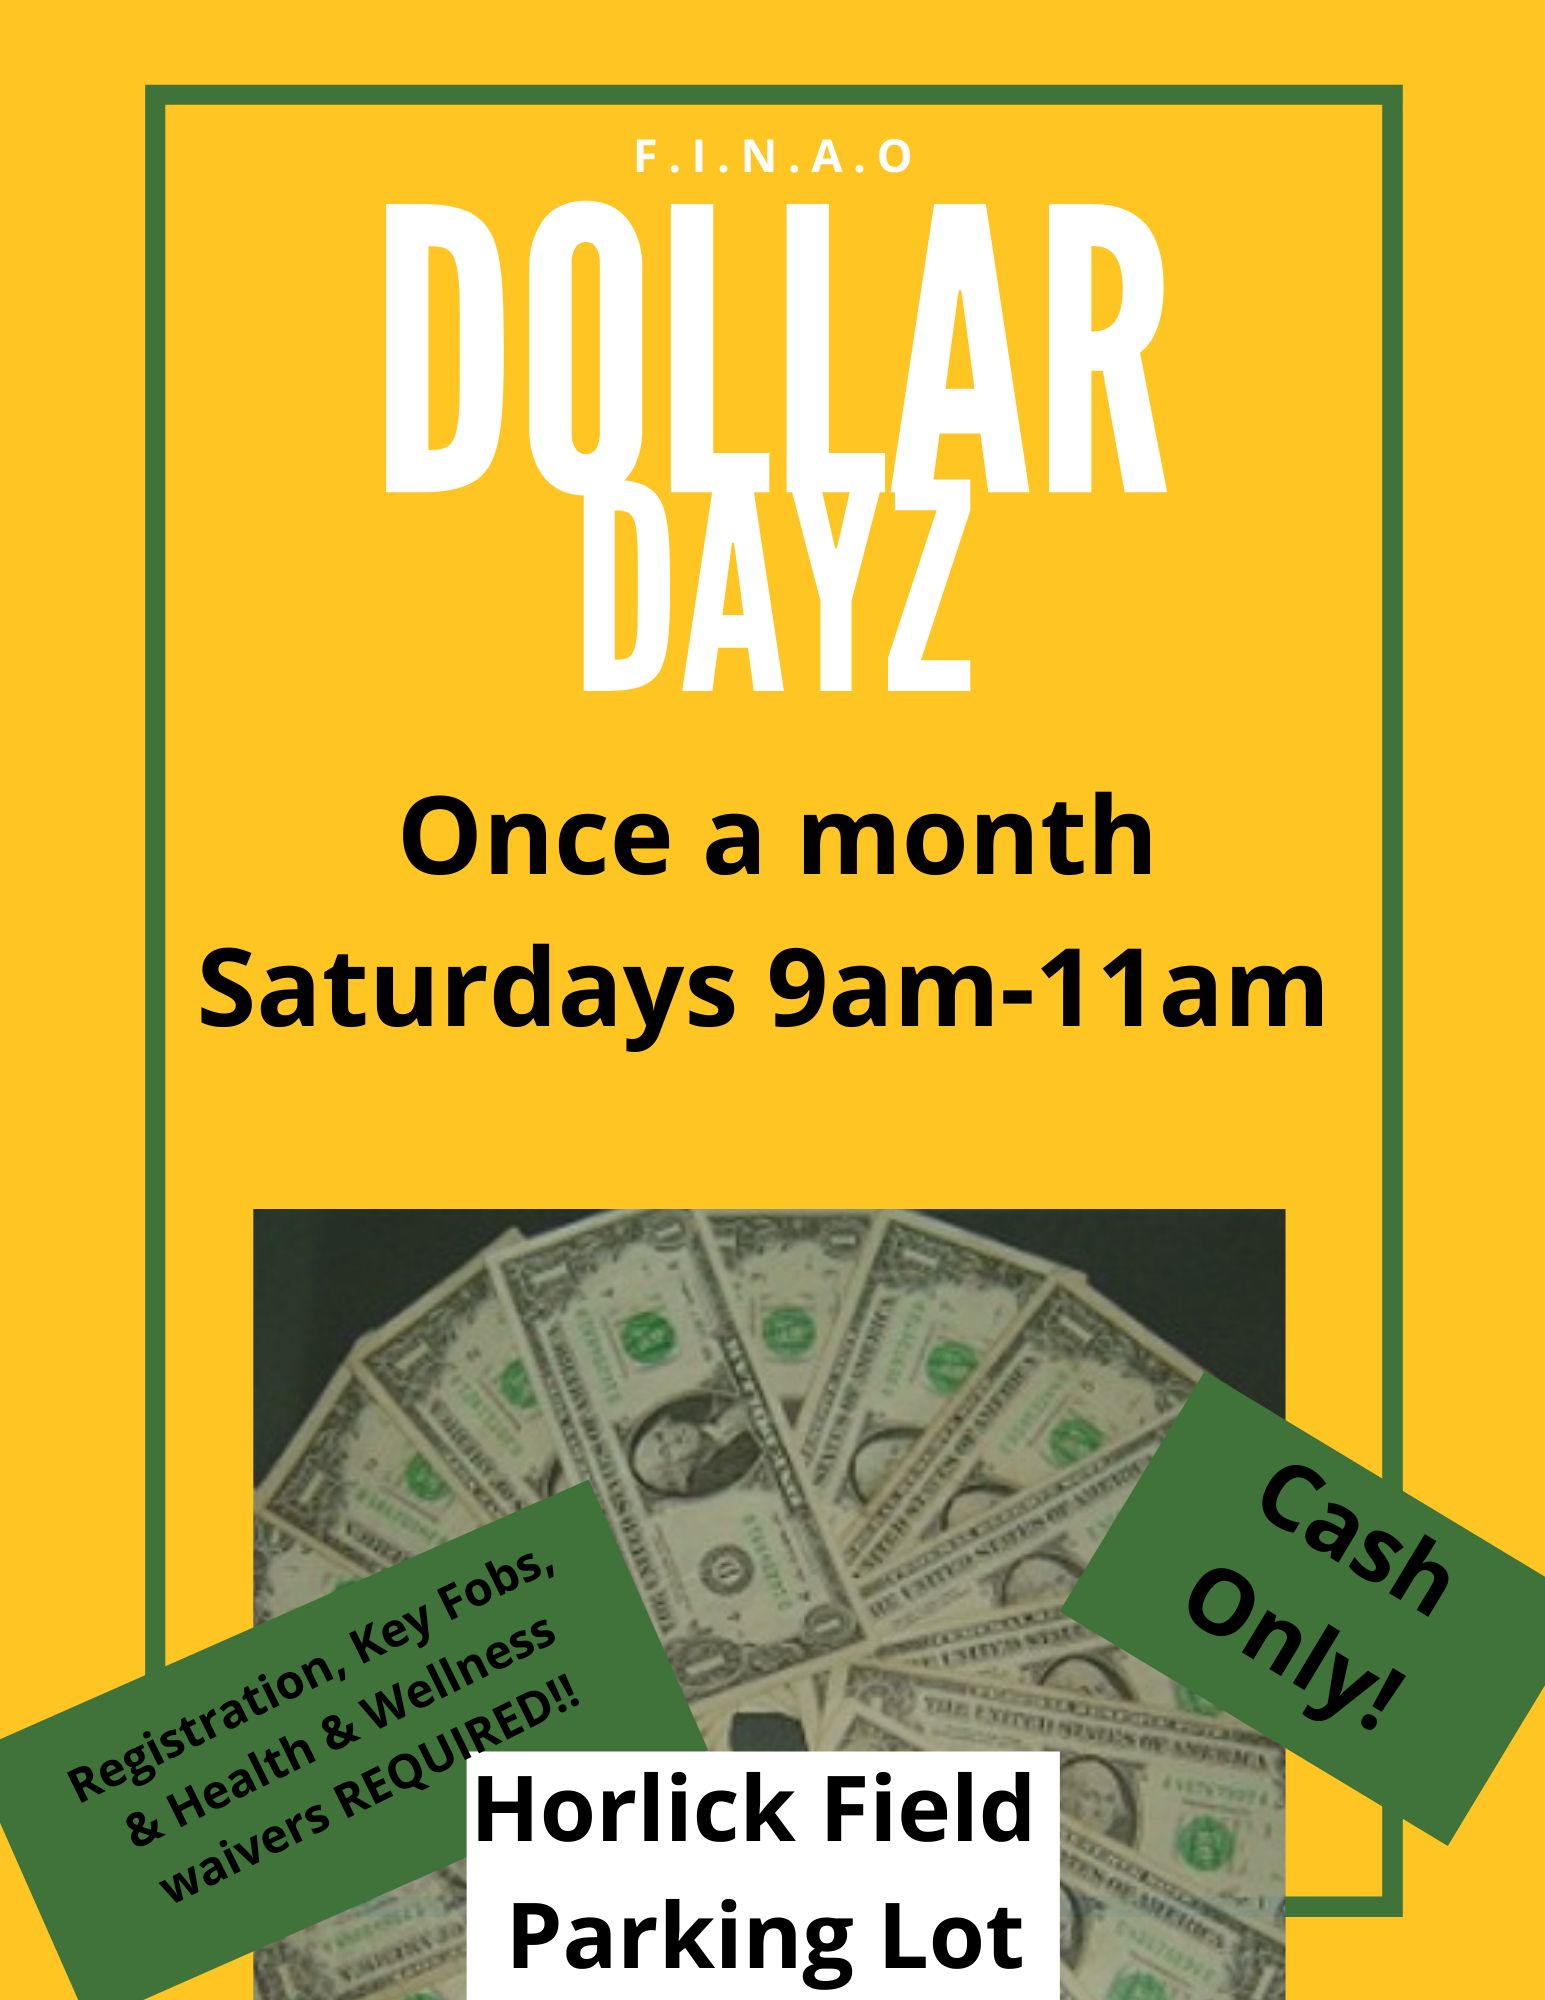 Dollar Days Information